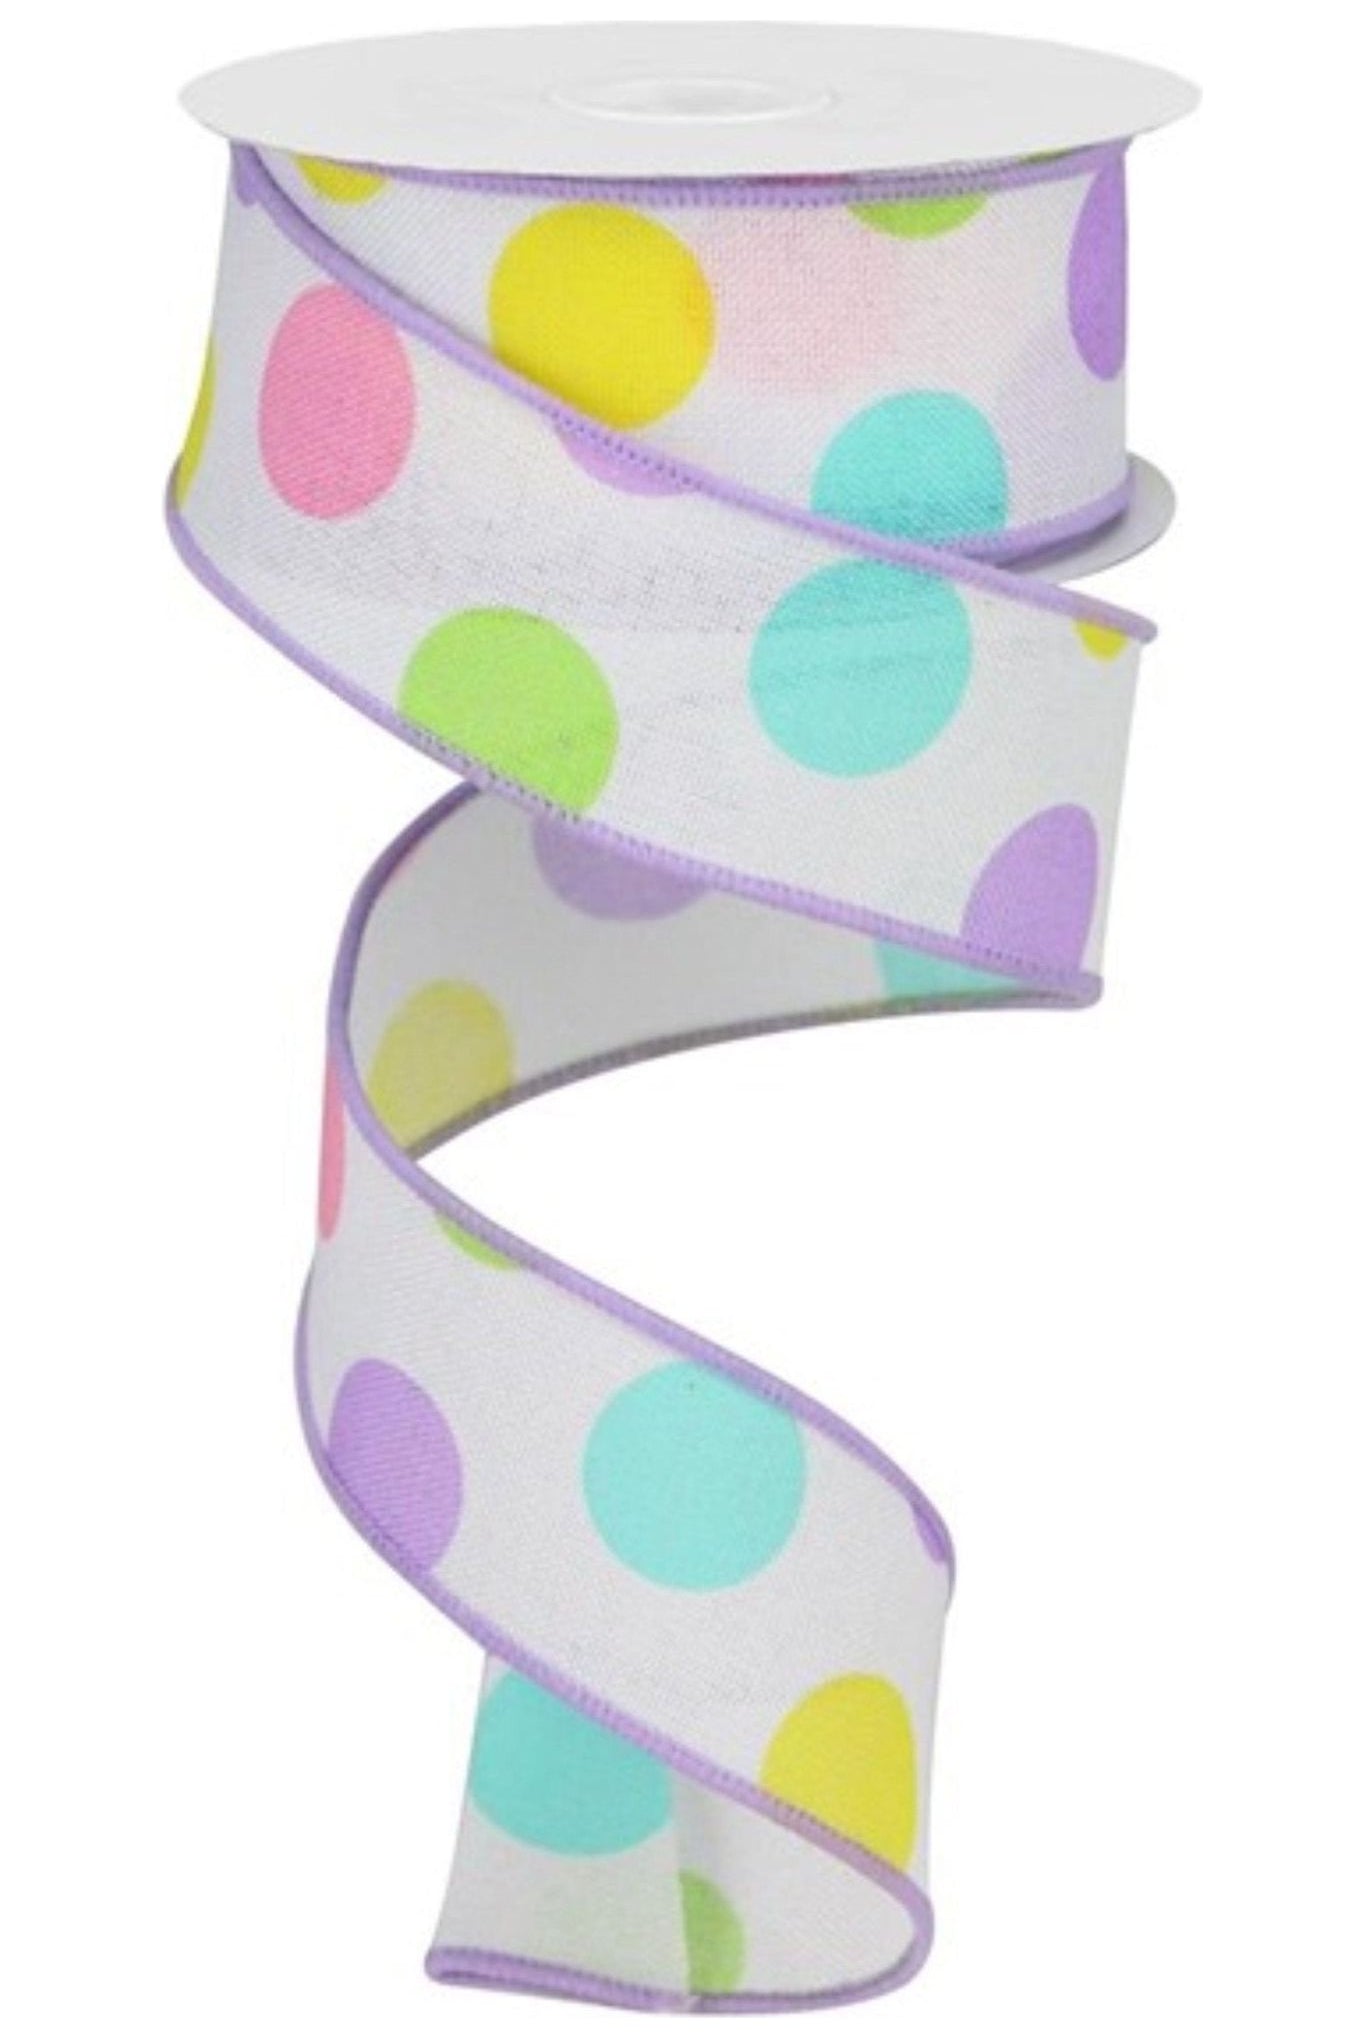 Shop For 1.5" Multi Polka Dots on Royal Ribbon: White/Lavender (10 Yards) RGA166213